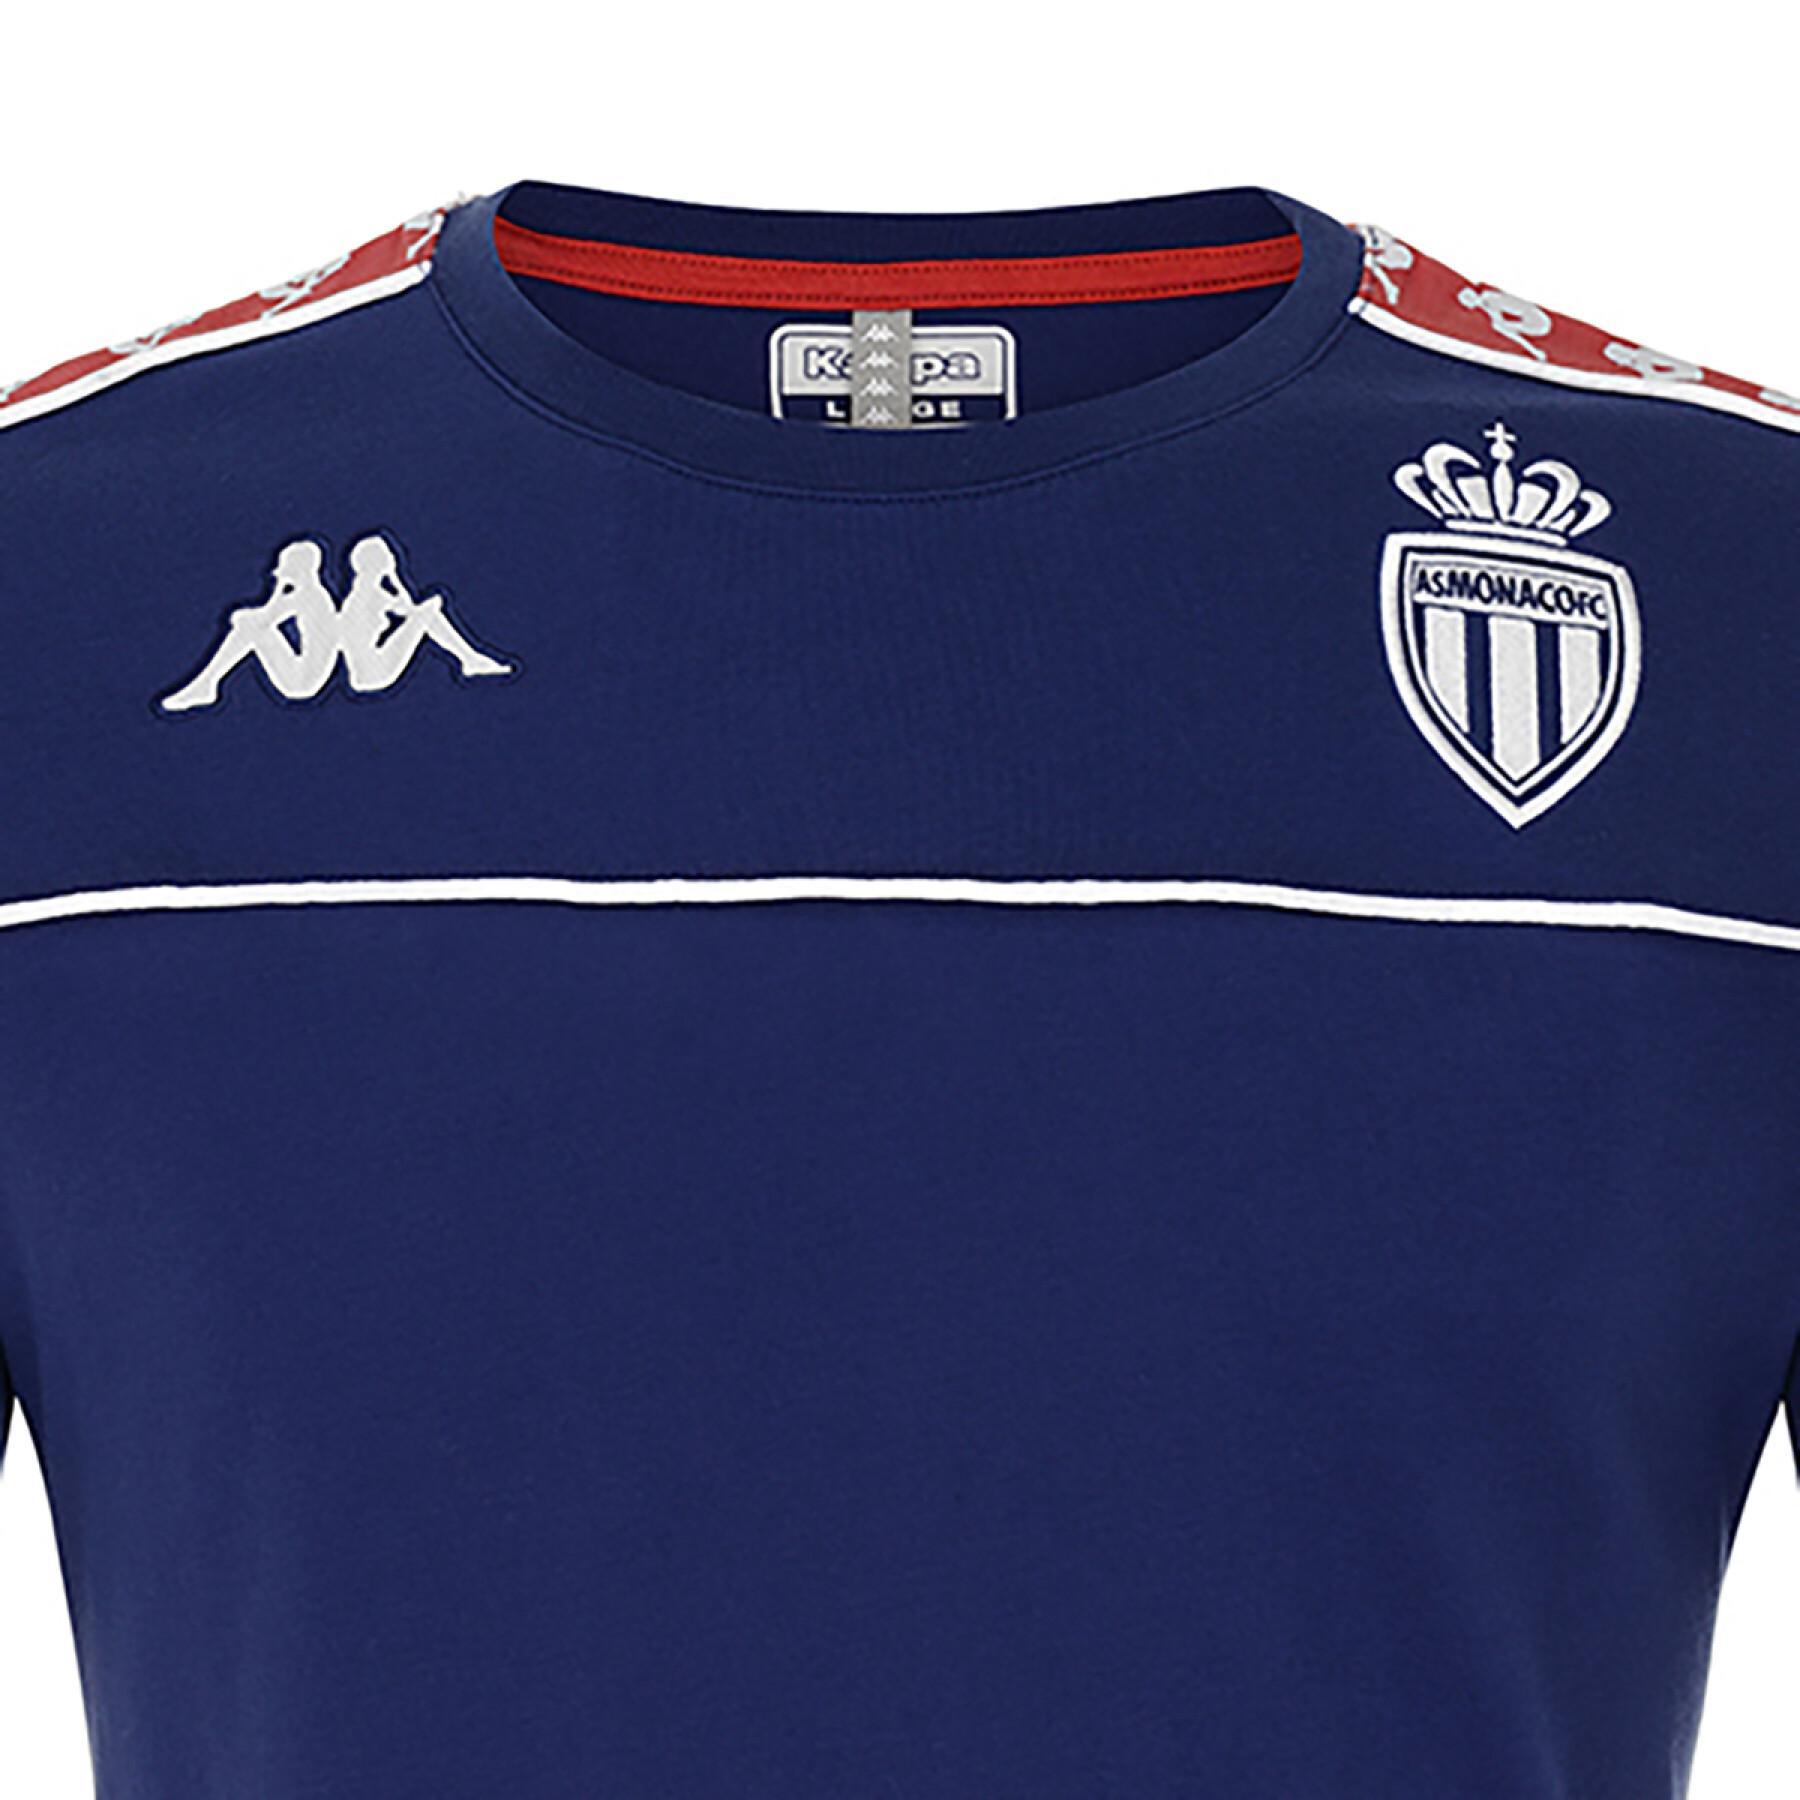 Koszulka dziecięca AS Monaco 2021/22 222 banda arari slim